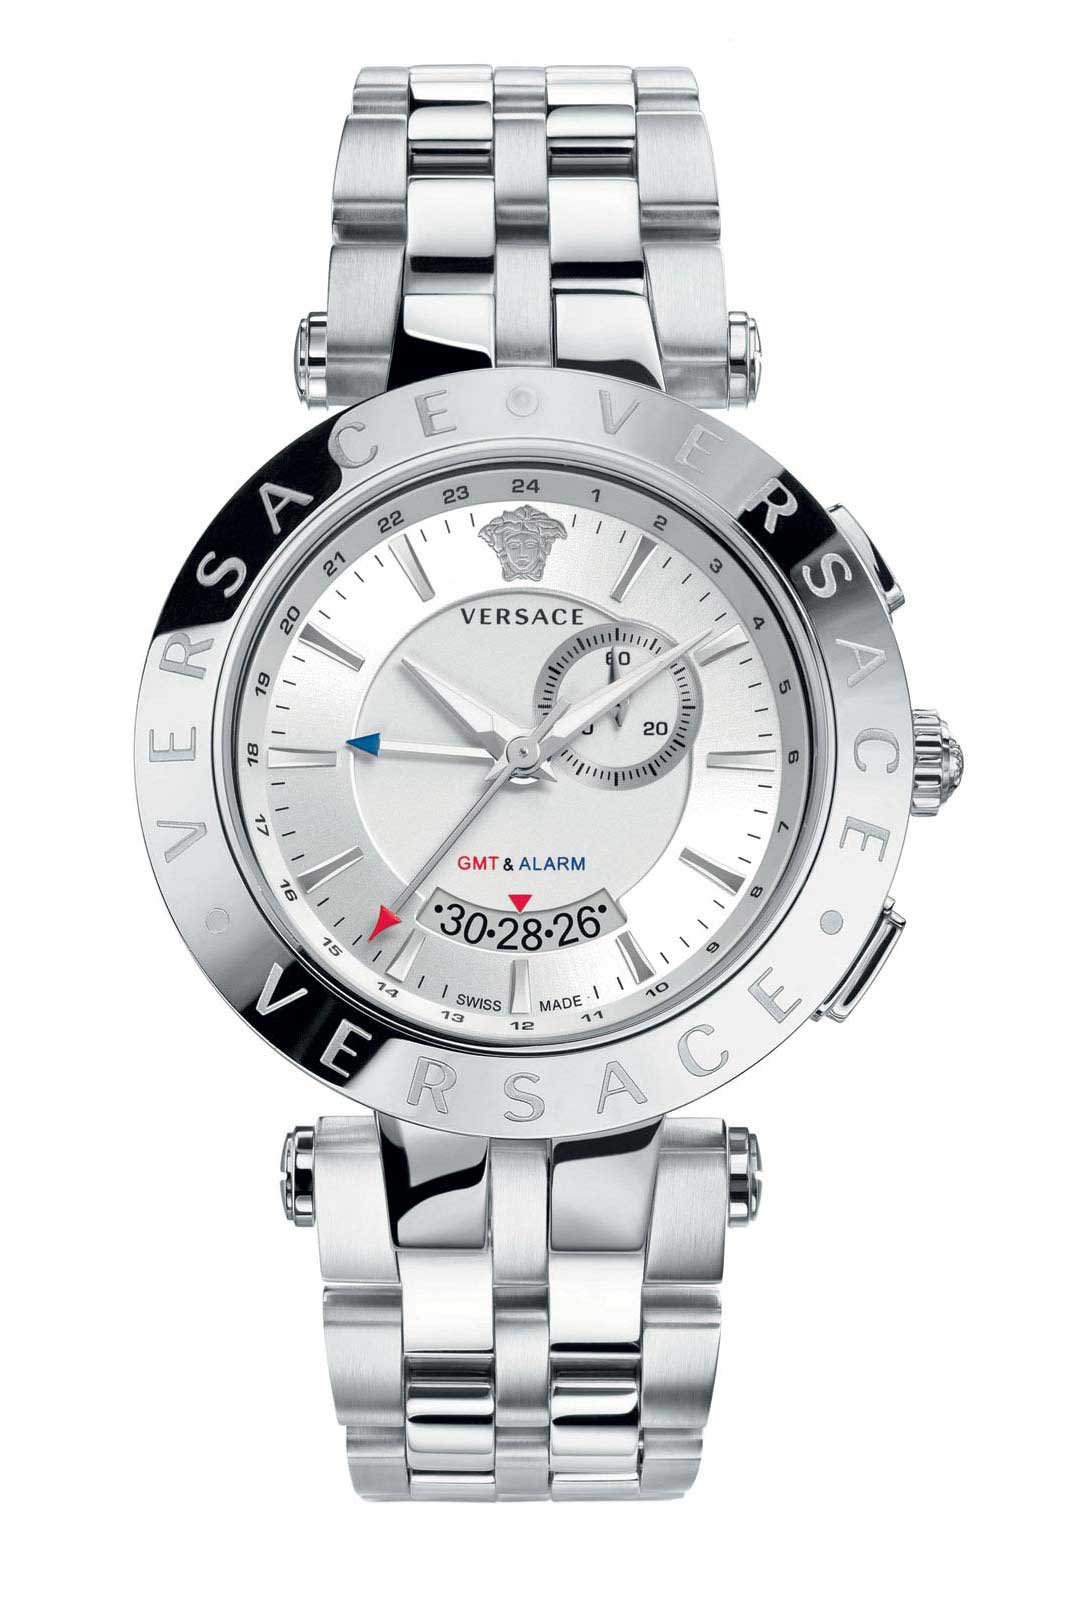 Versace QUARTZ GMT watch 8176-1990 WHITE/SILVER DIAL